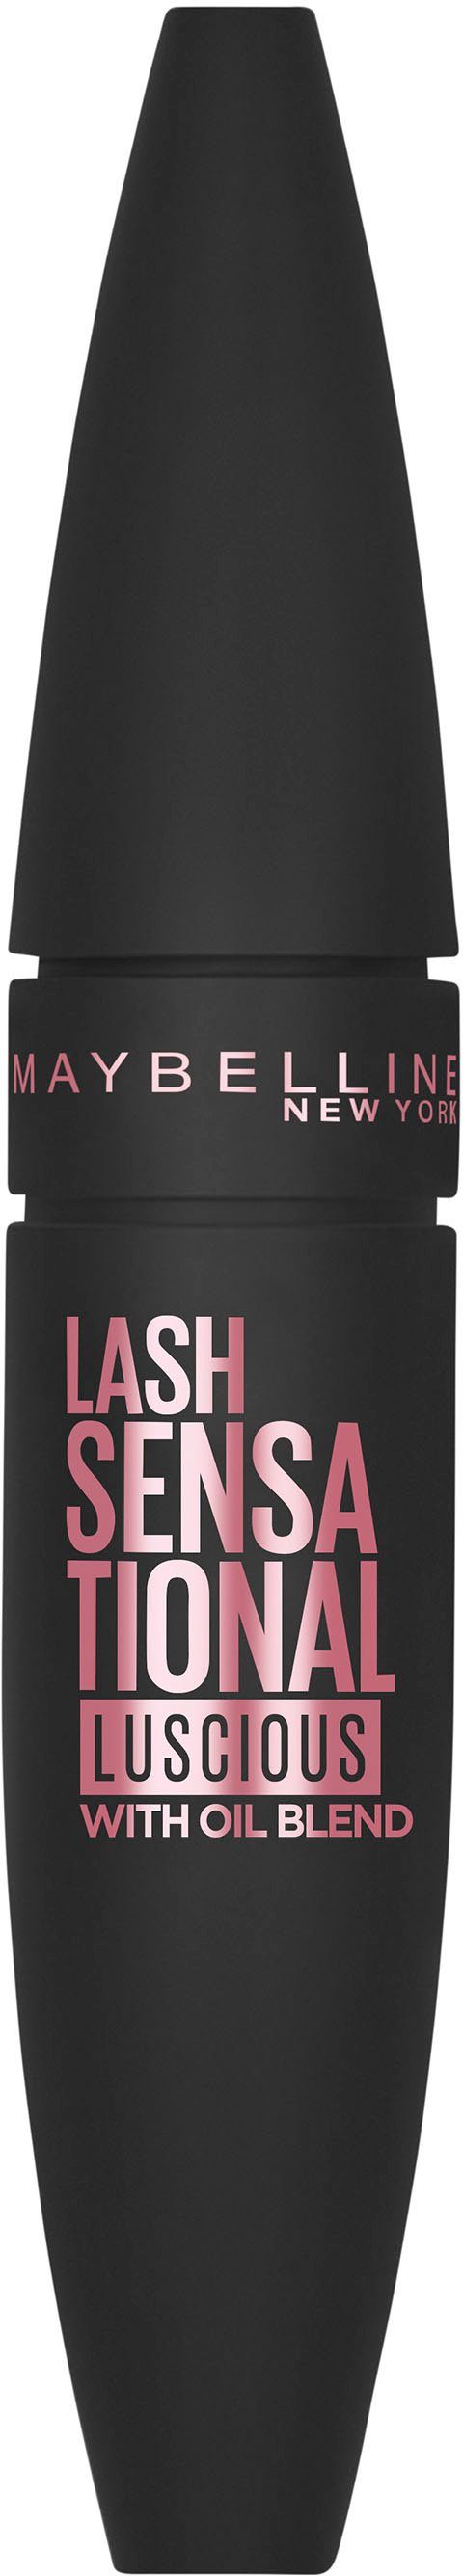 MAYBELLINE NEW YORK Mascara Sensational Luscious Lash